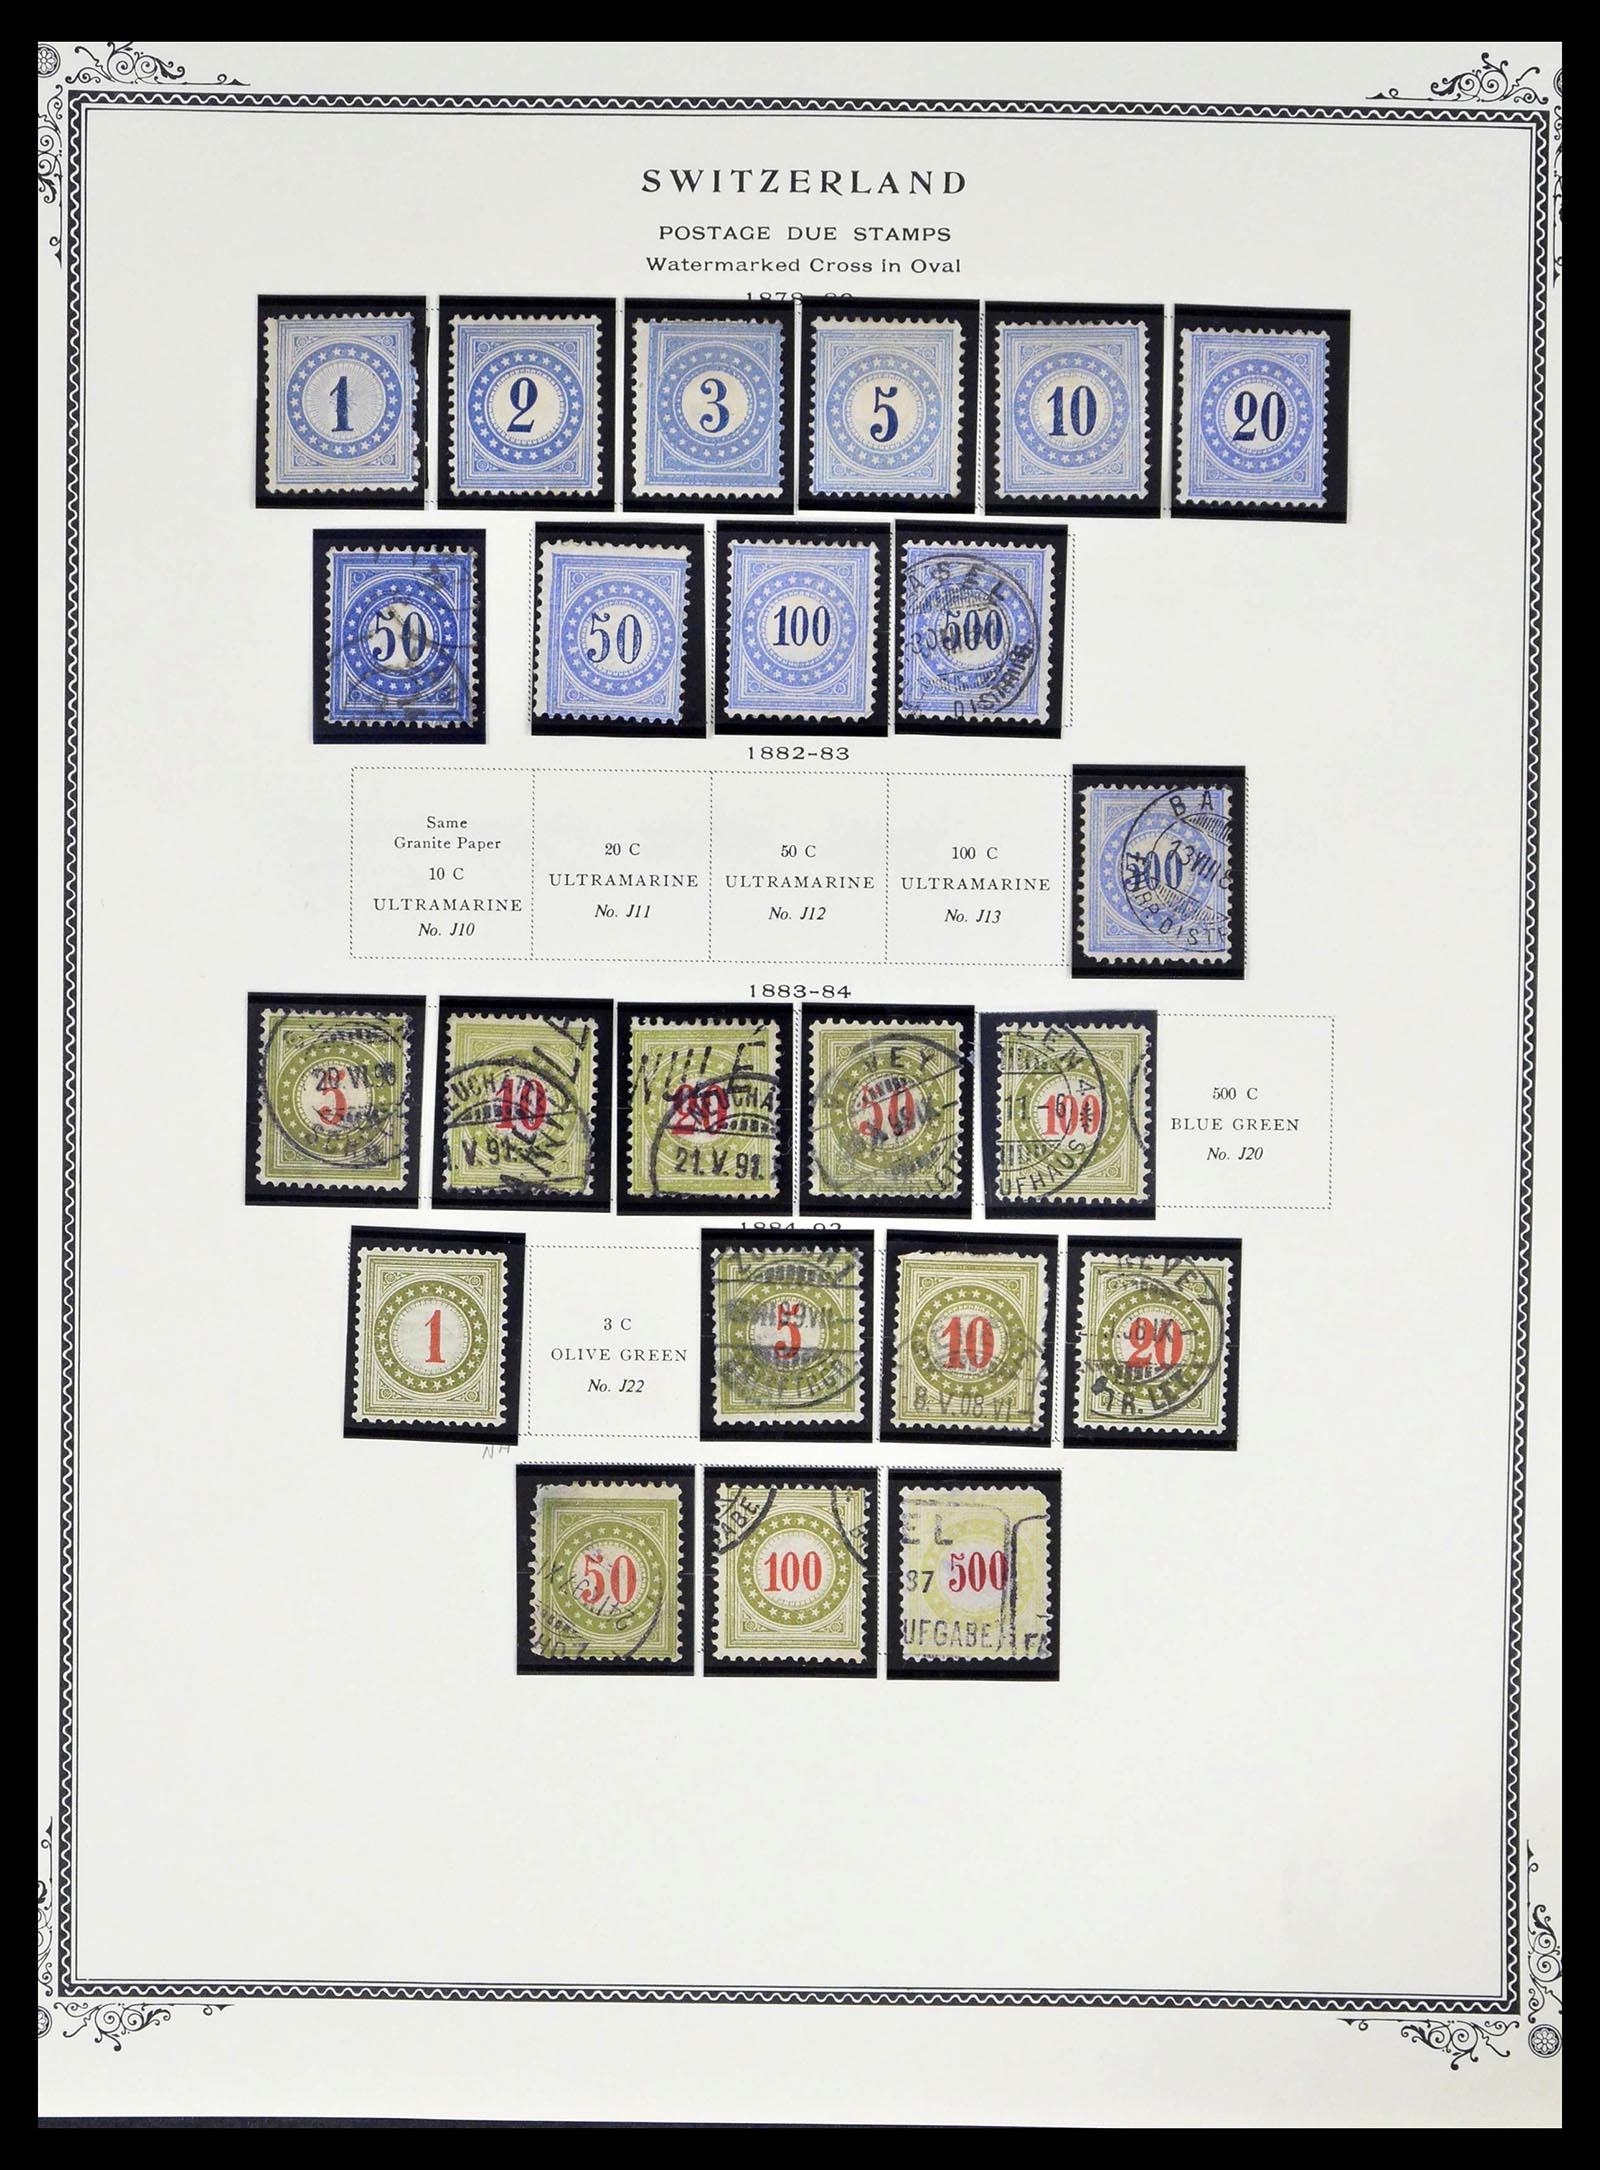 39178 0226 - Stamp collection 39178 Switzerland 1850-1989.